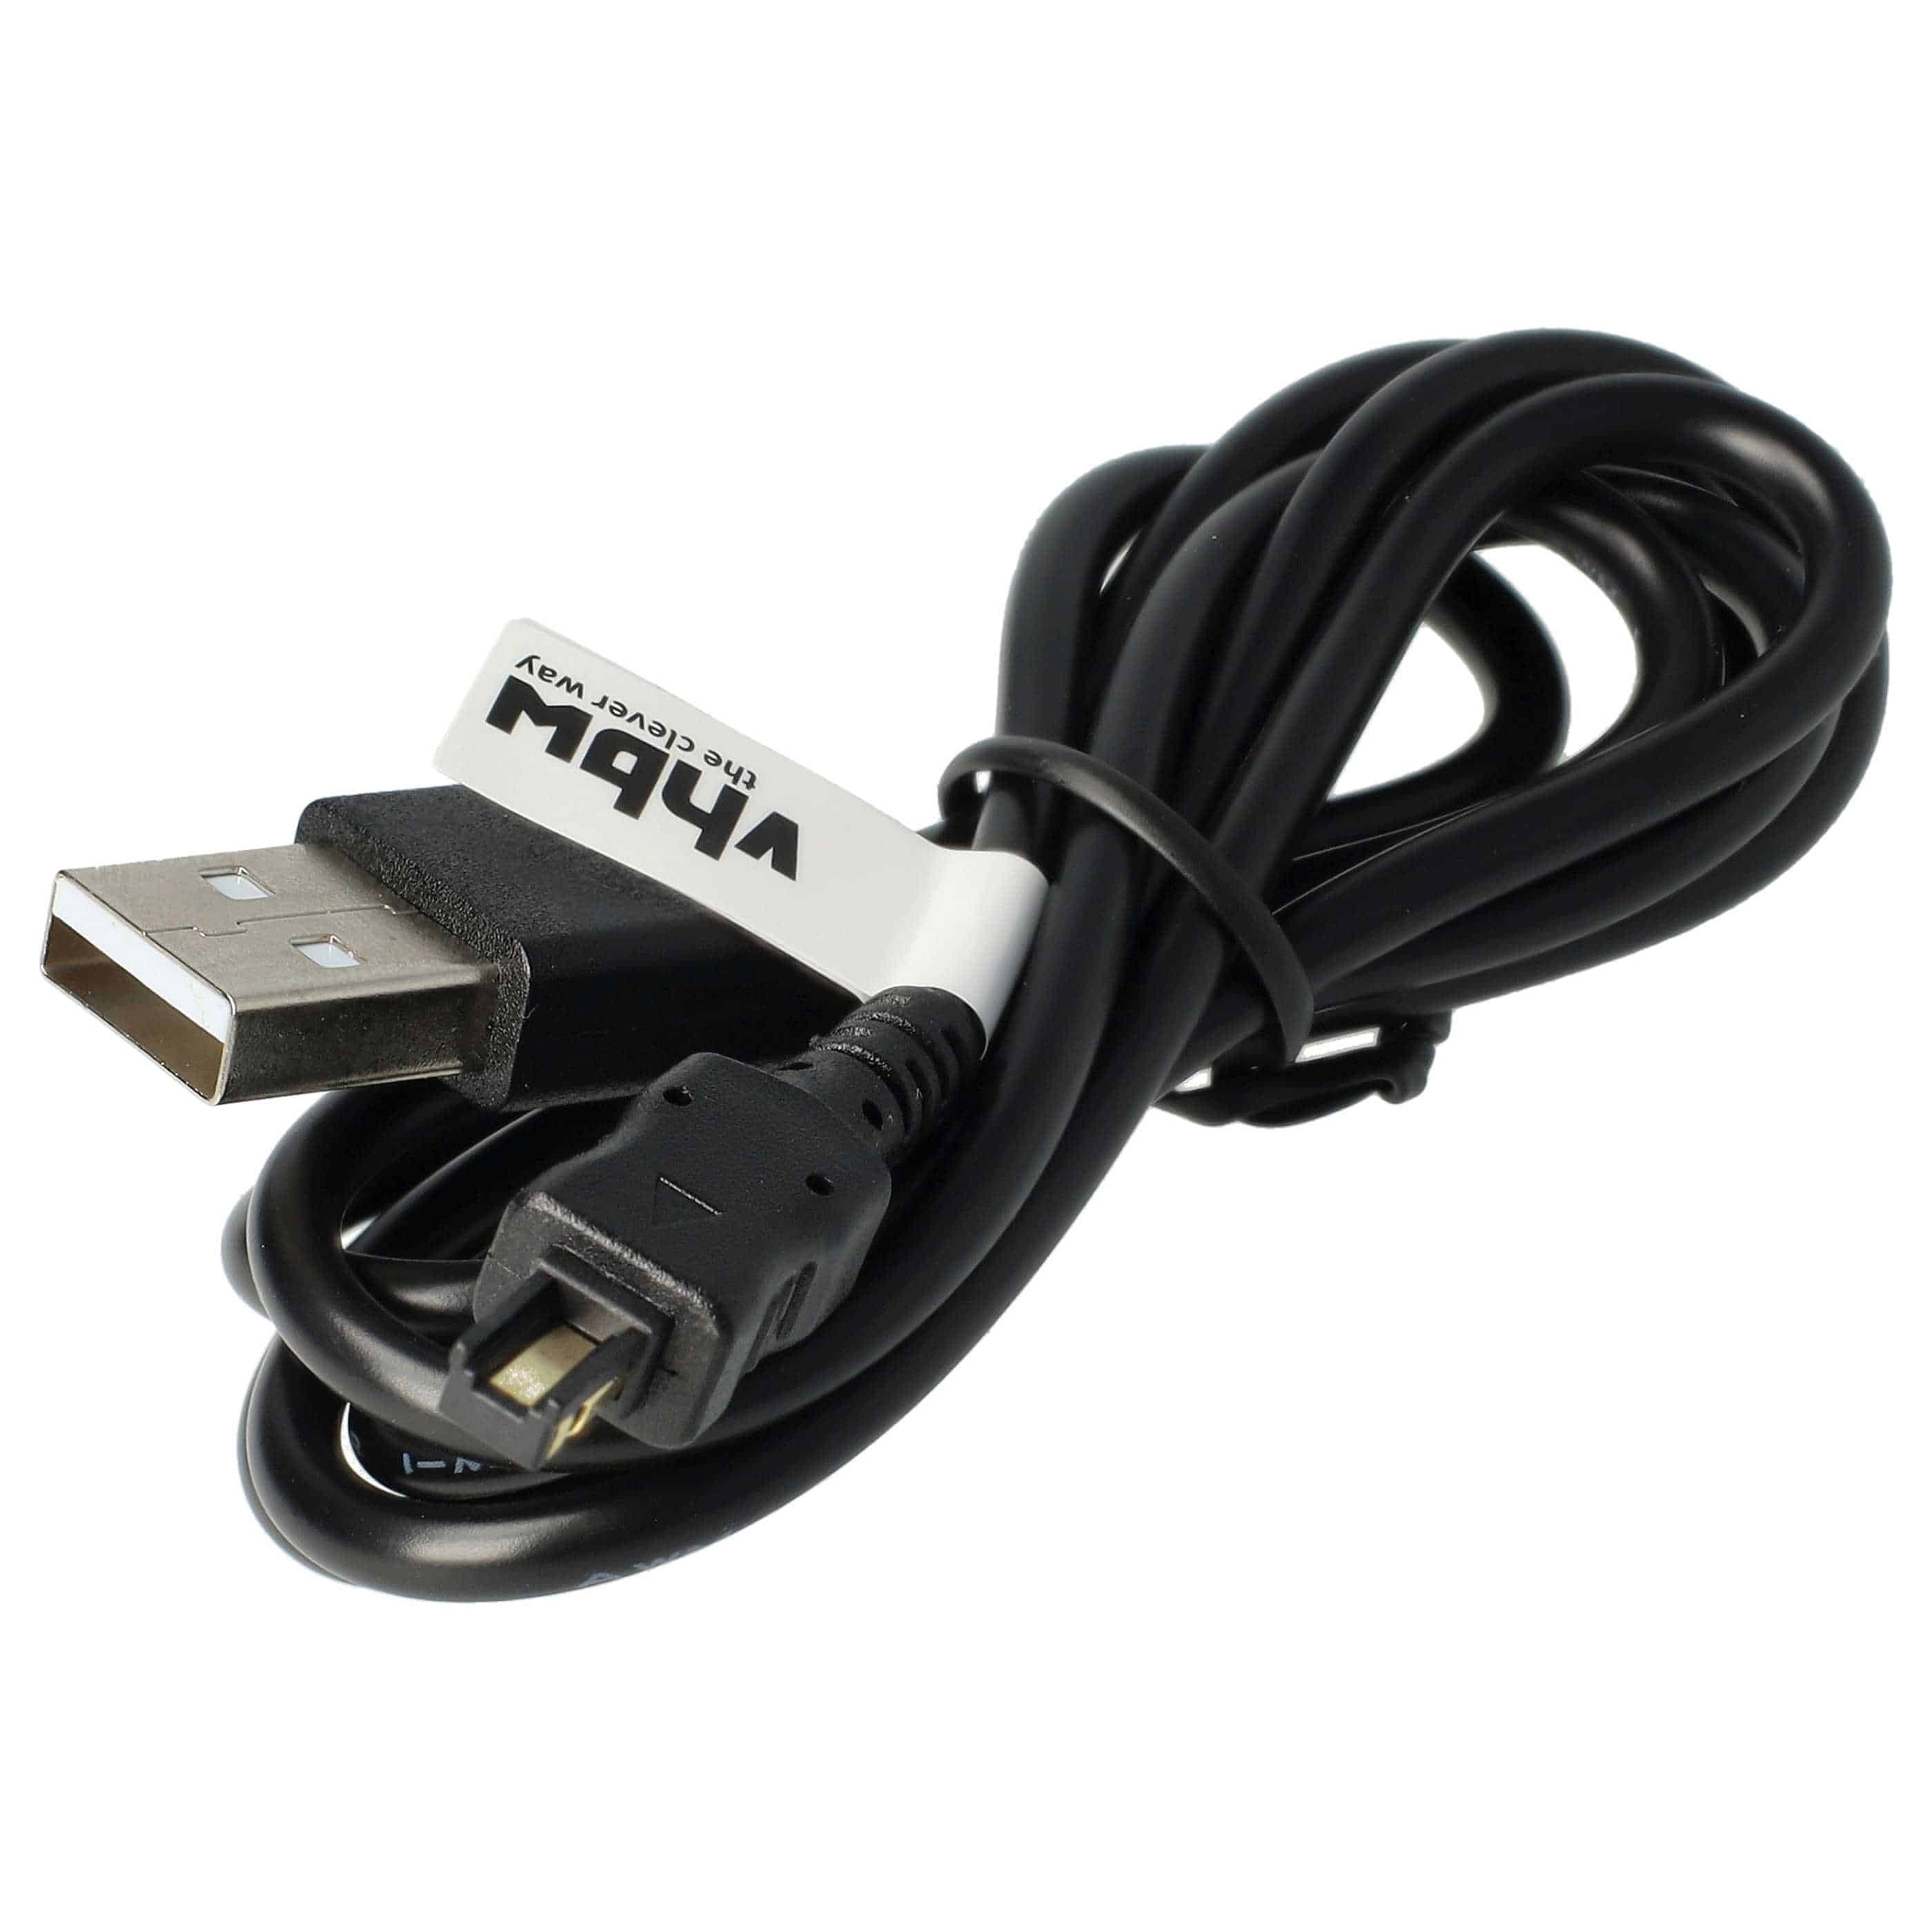 Câble de transfert USB pour appareil photo Nikon Coolpix L100 – 120 cm